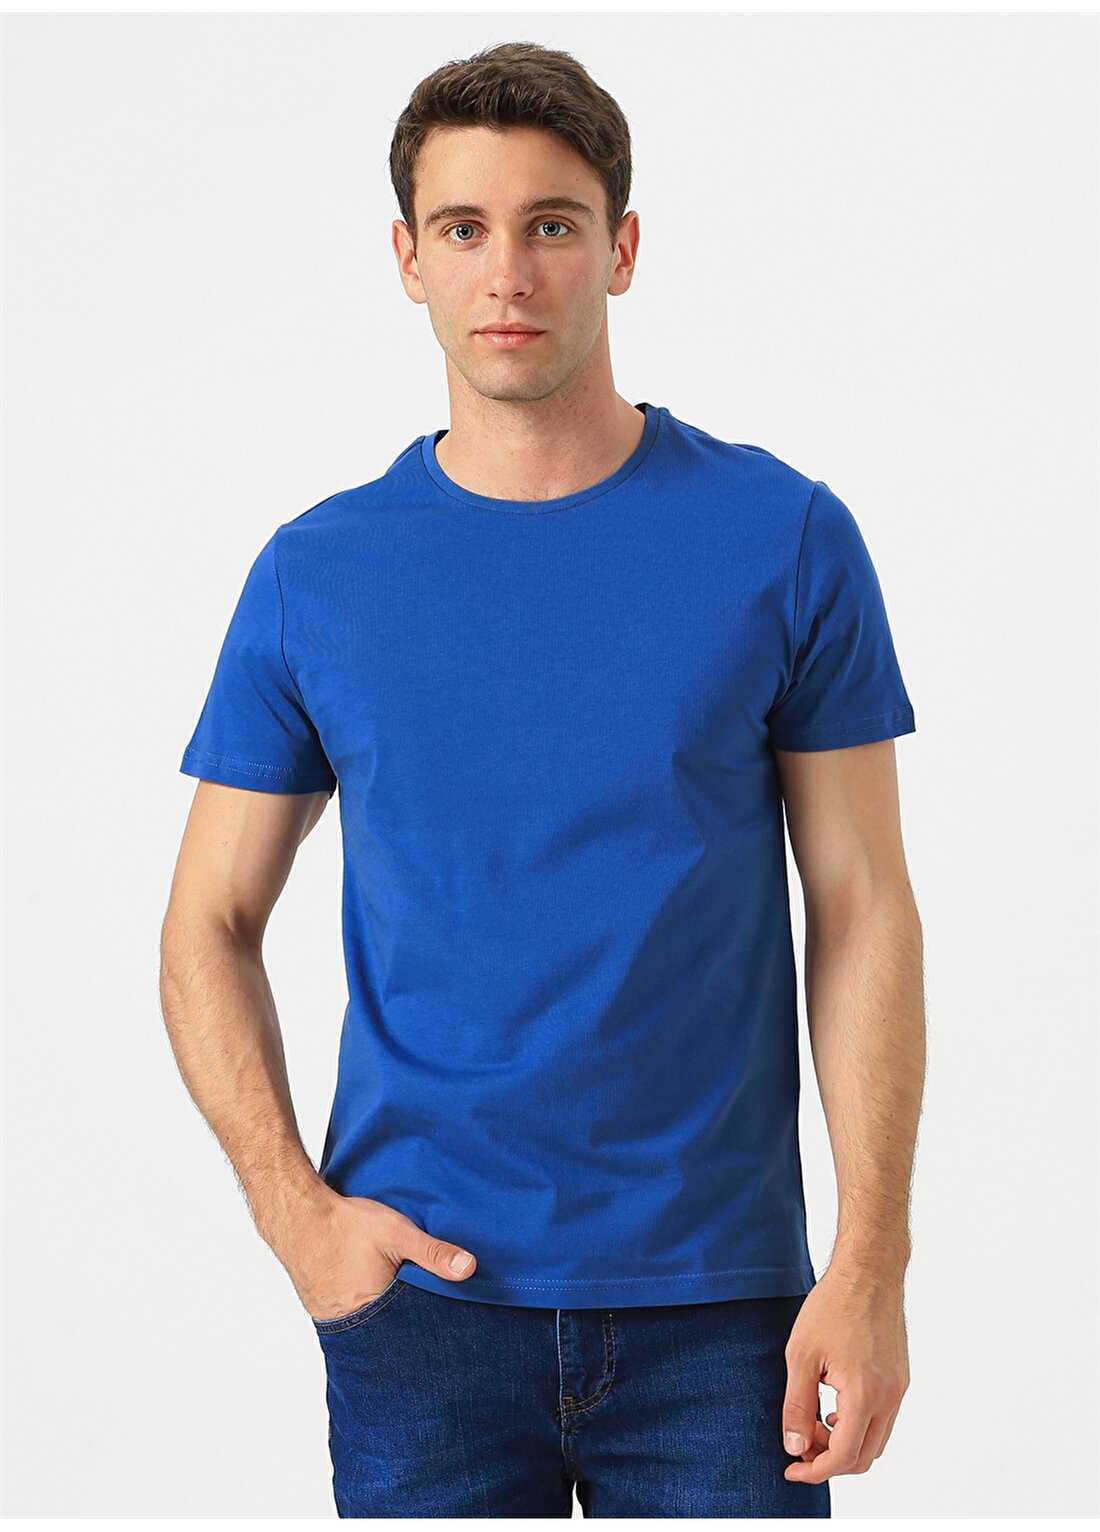 Limon Koyu Mavi T-Shirt